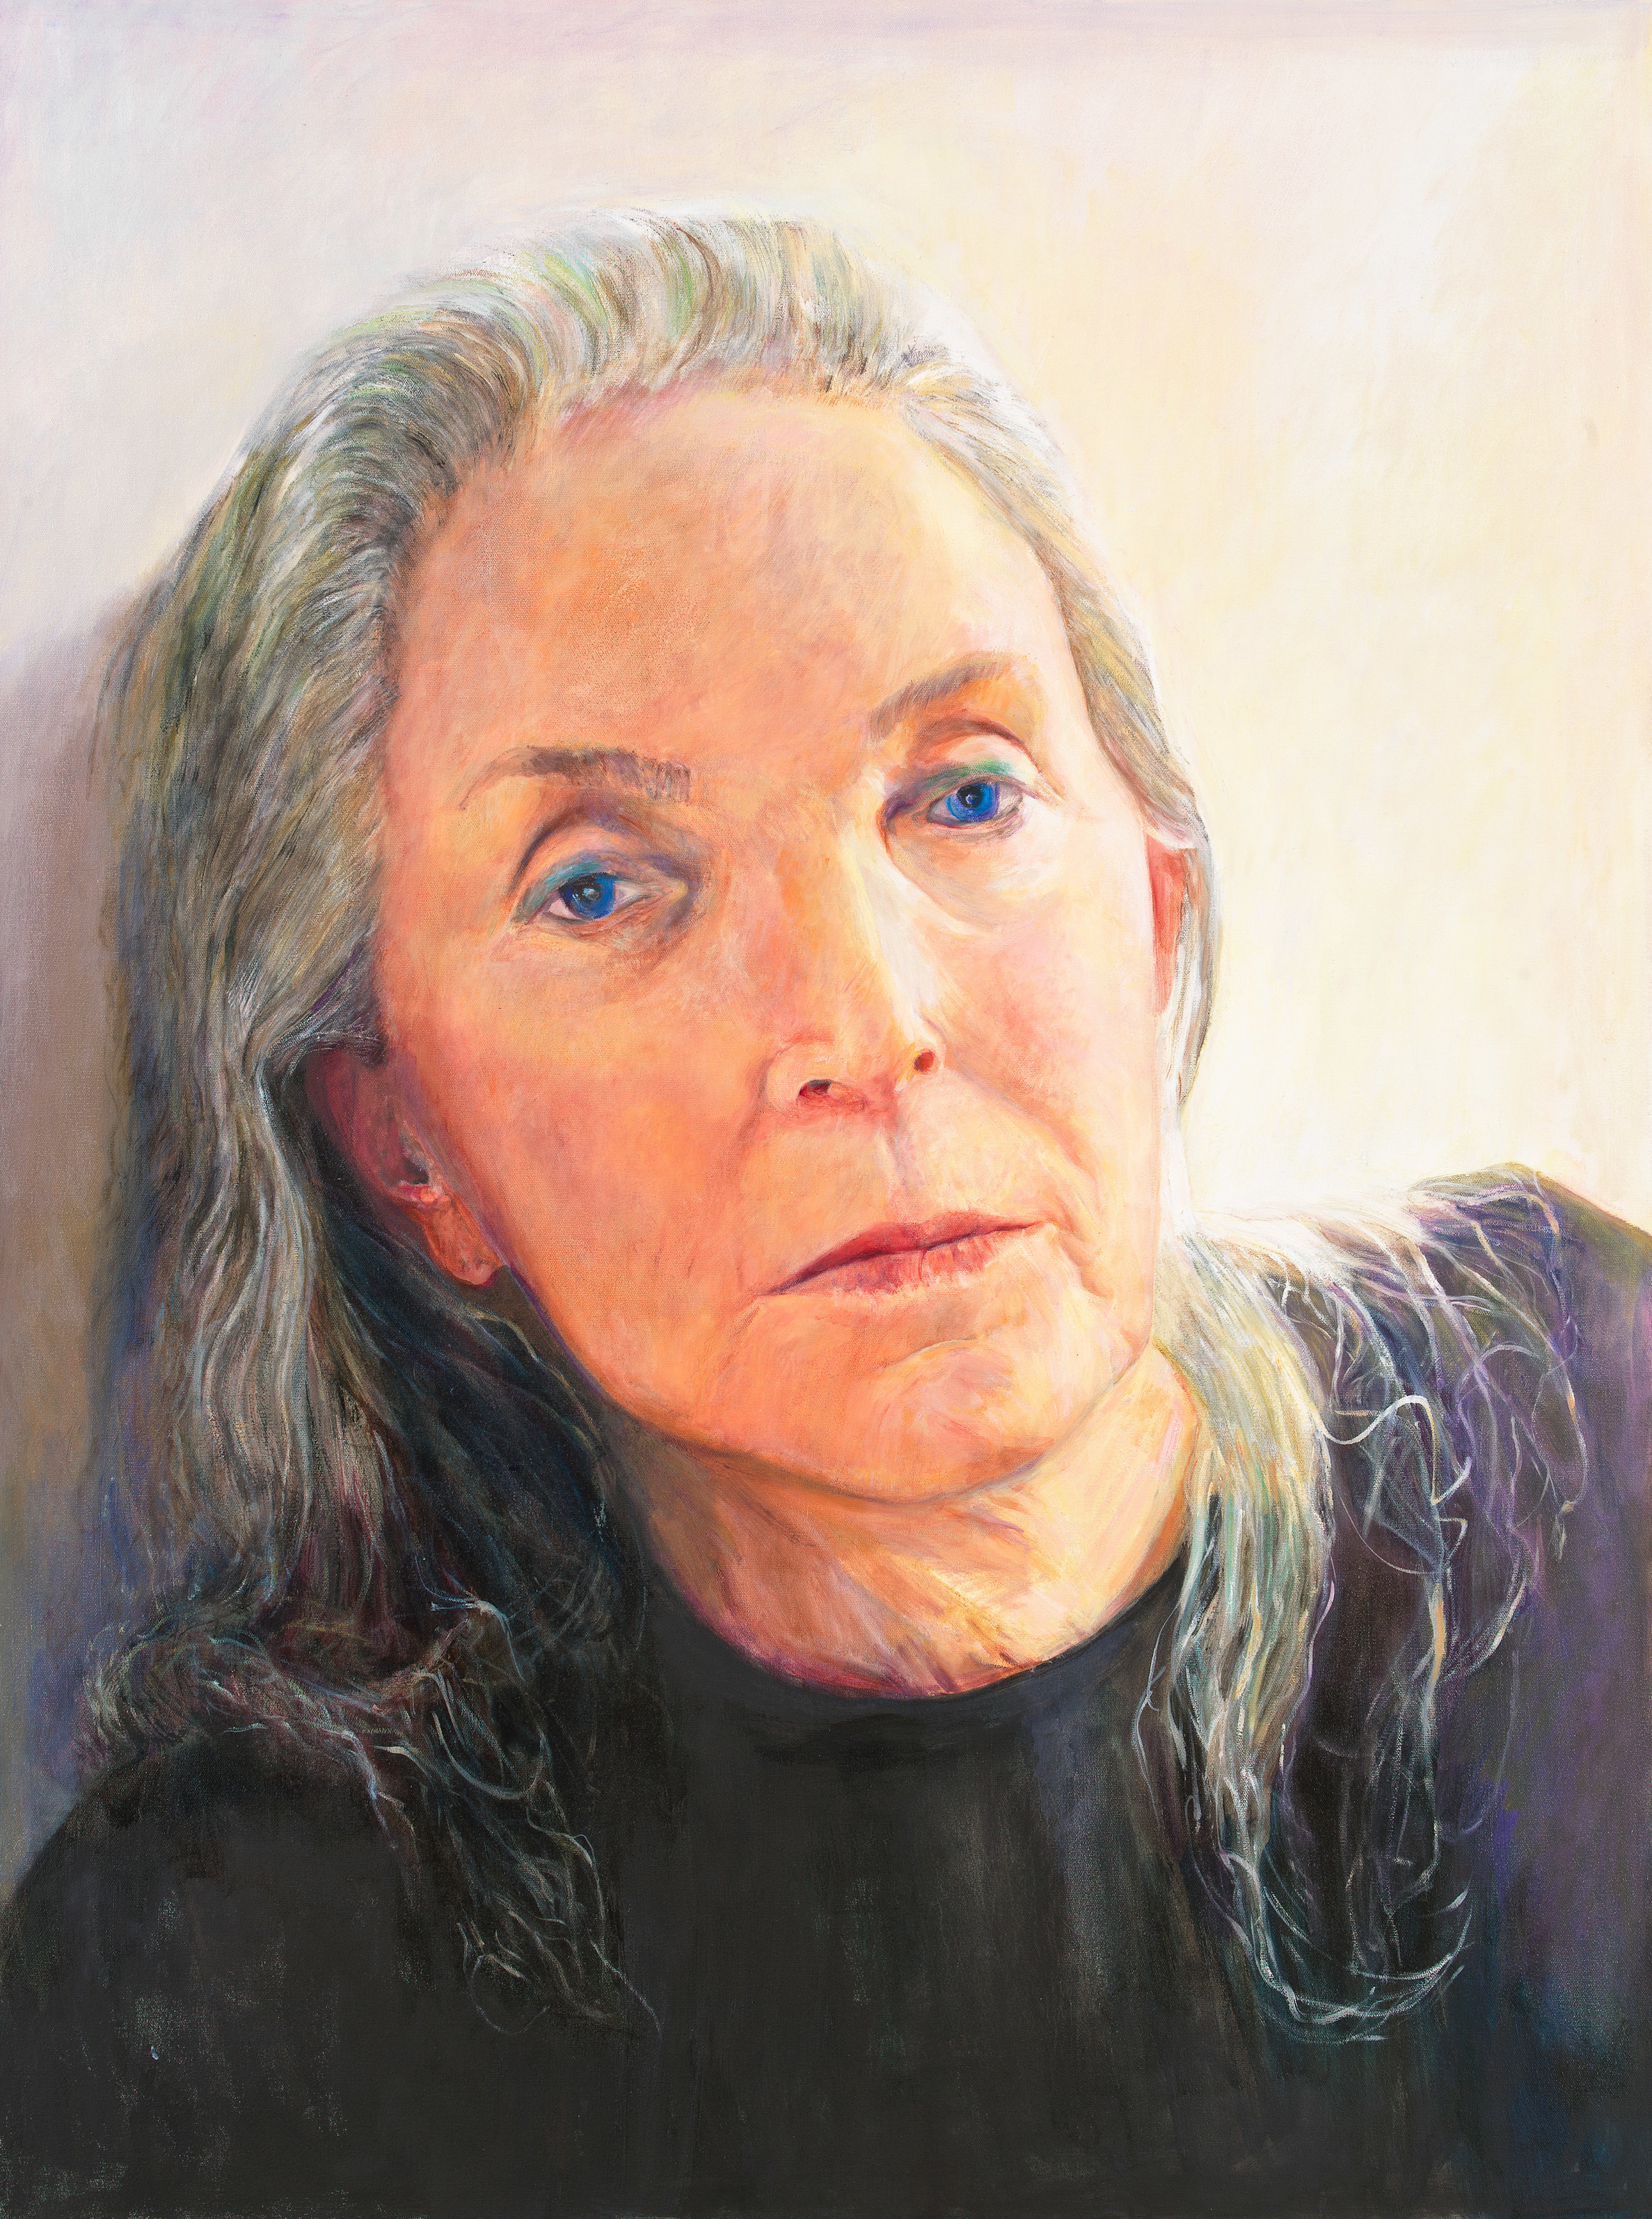 Self-Portrait #1, 2010, Oil on canvas